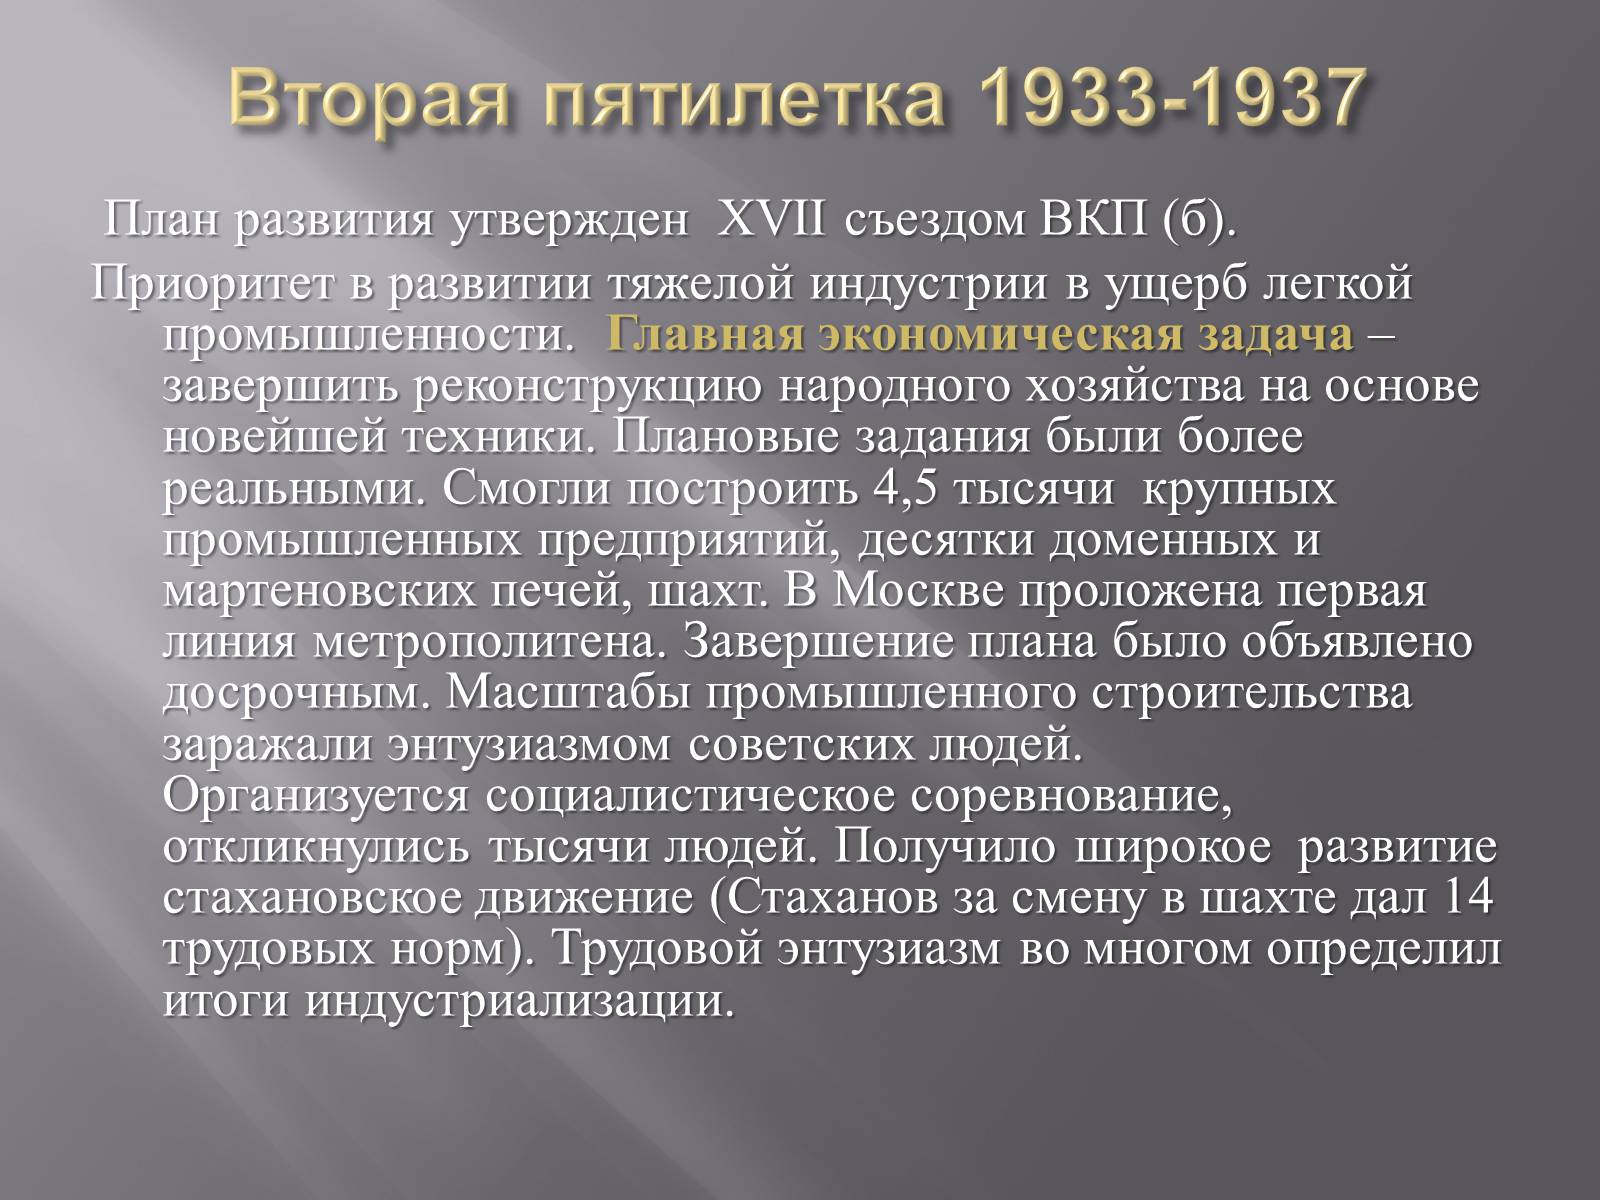 Презентація на тему «Сталинская модернизация СССР 1920-1930гг» - Слайд #10